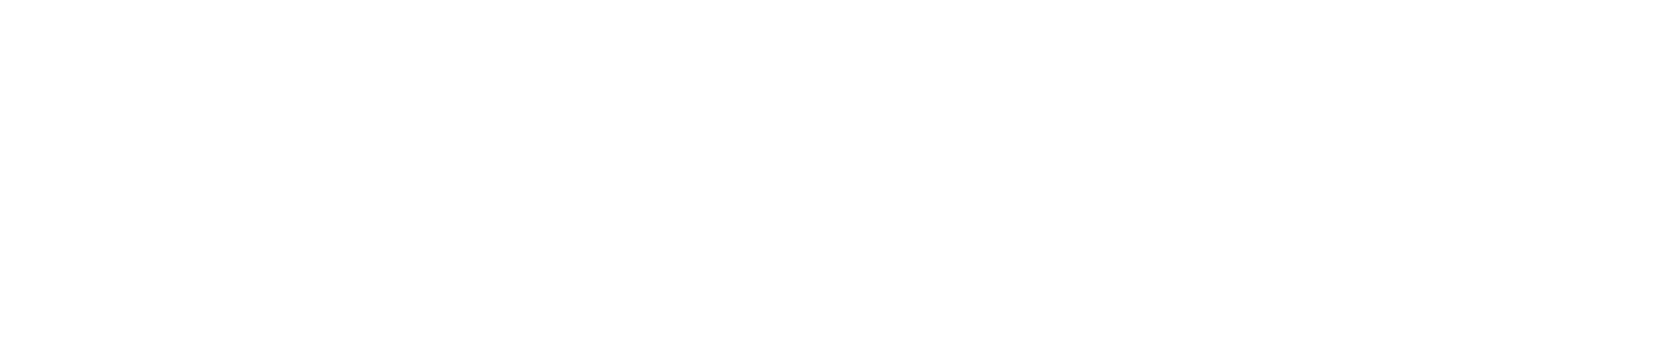 Outwish Company Logo.